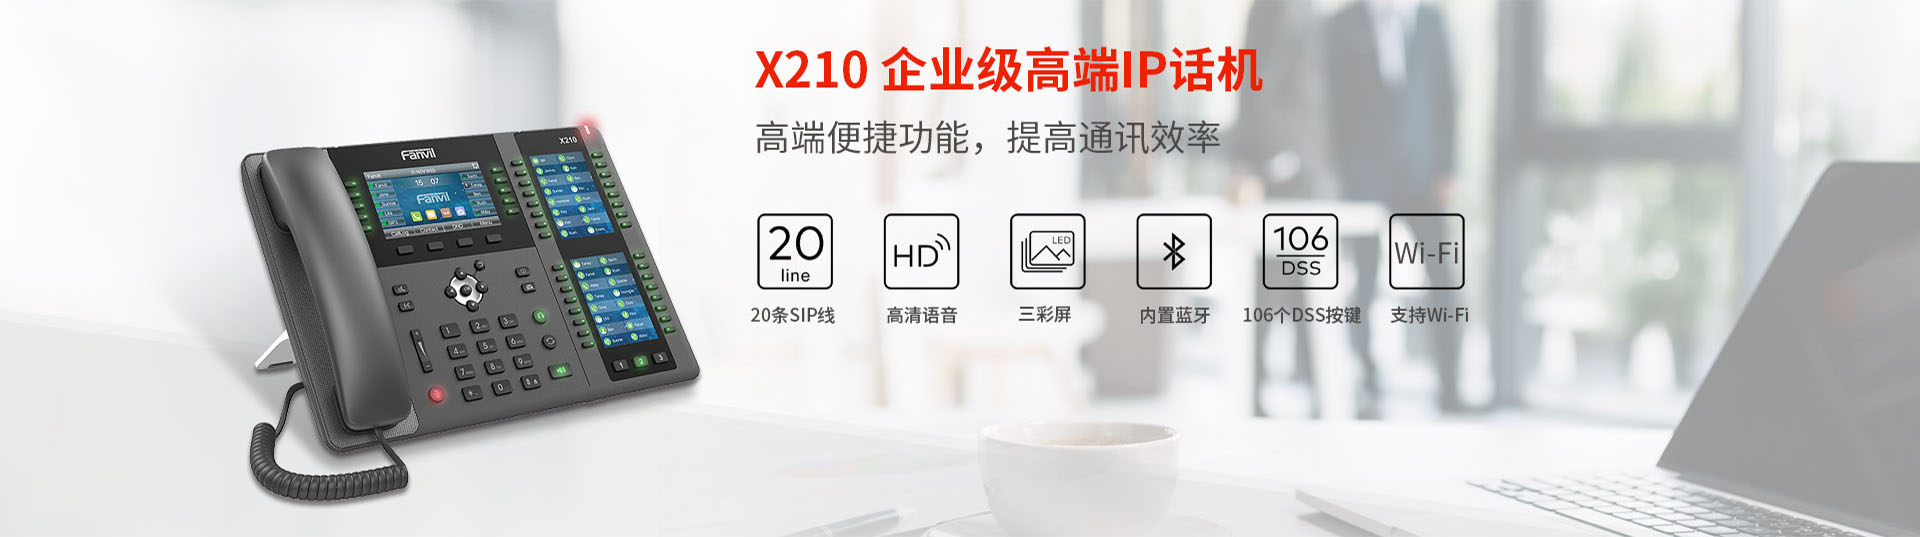 X210高端商务IP电话机